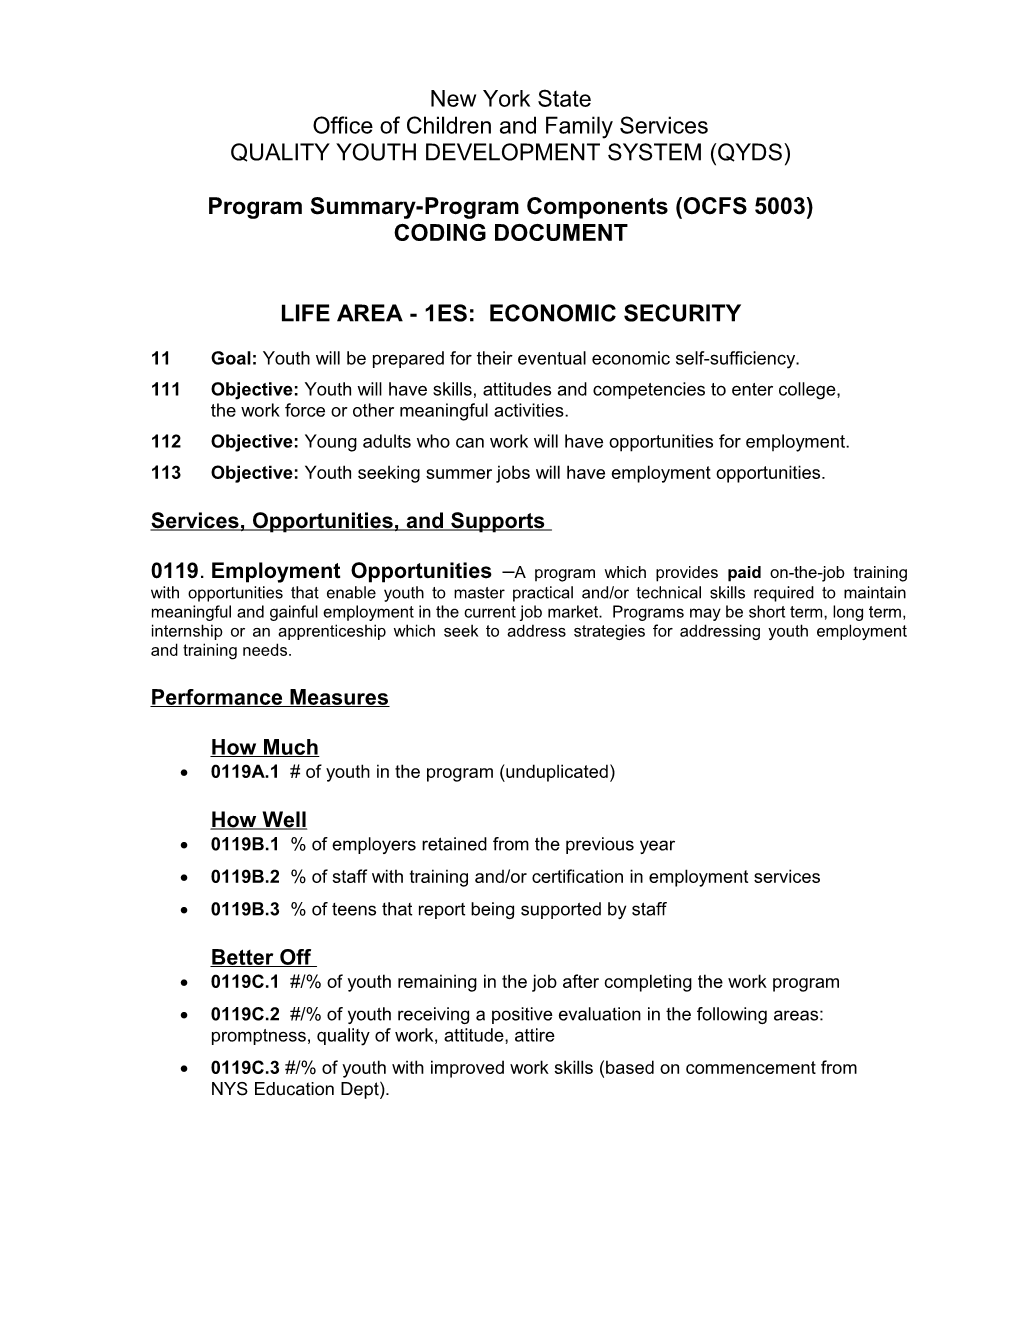 Program Summary-Program Components(OCFS 5003)